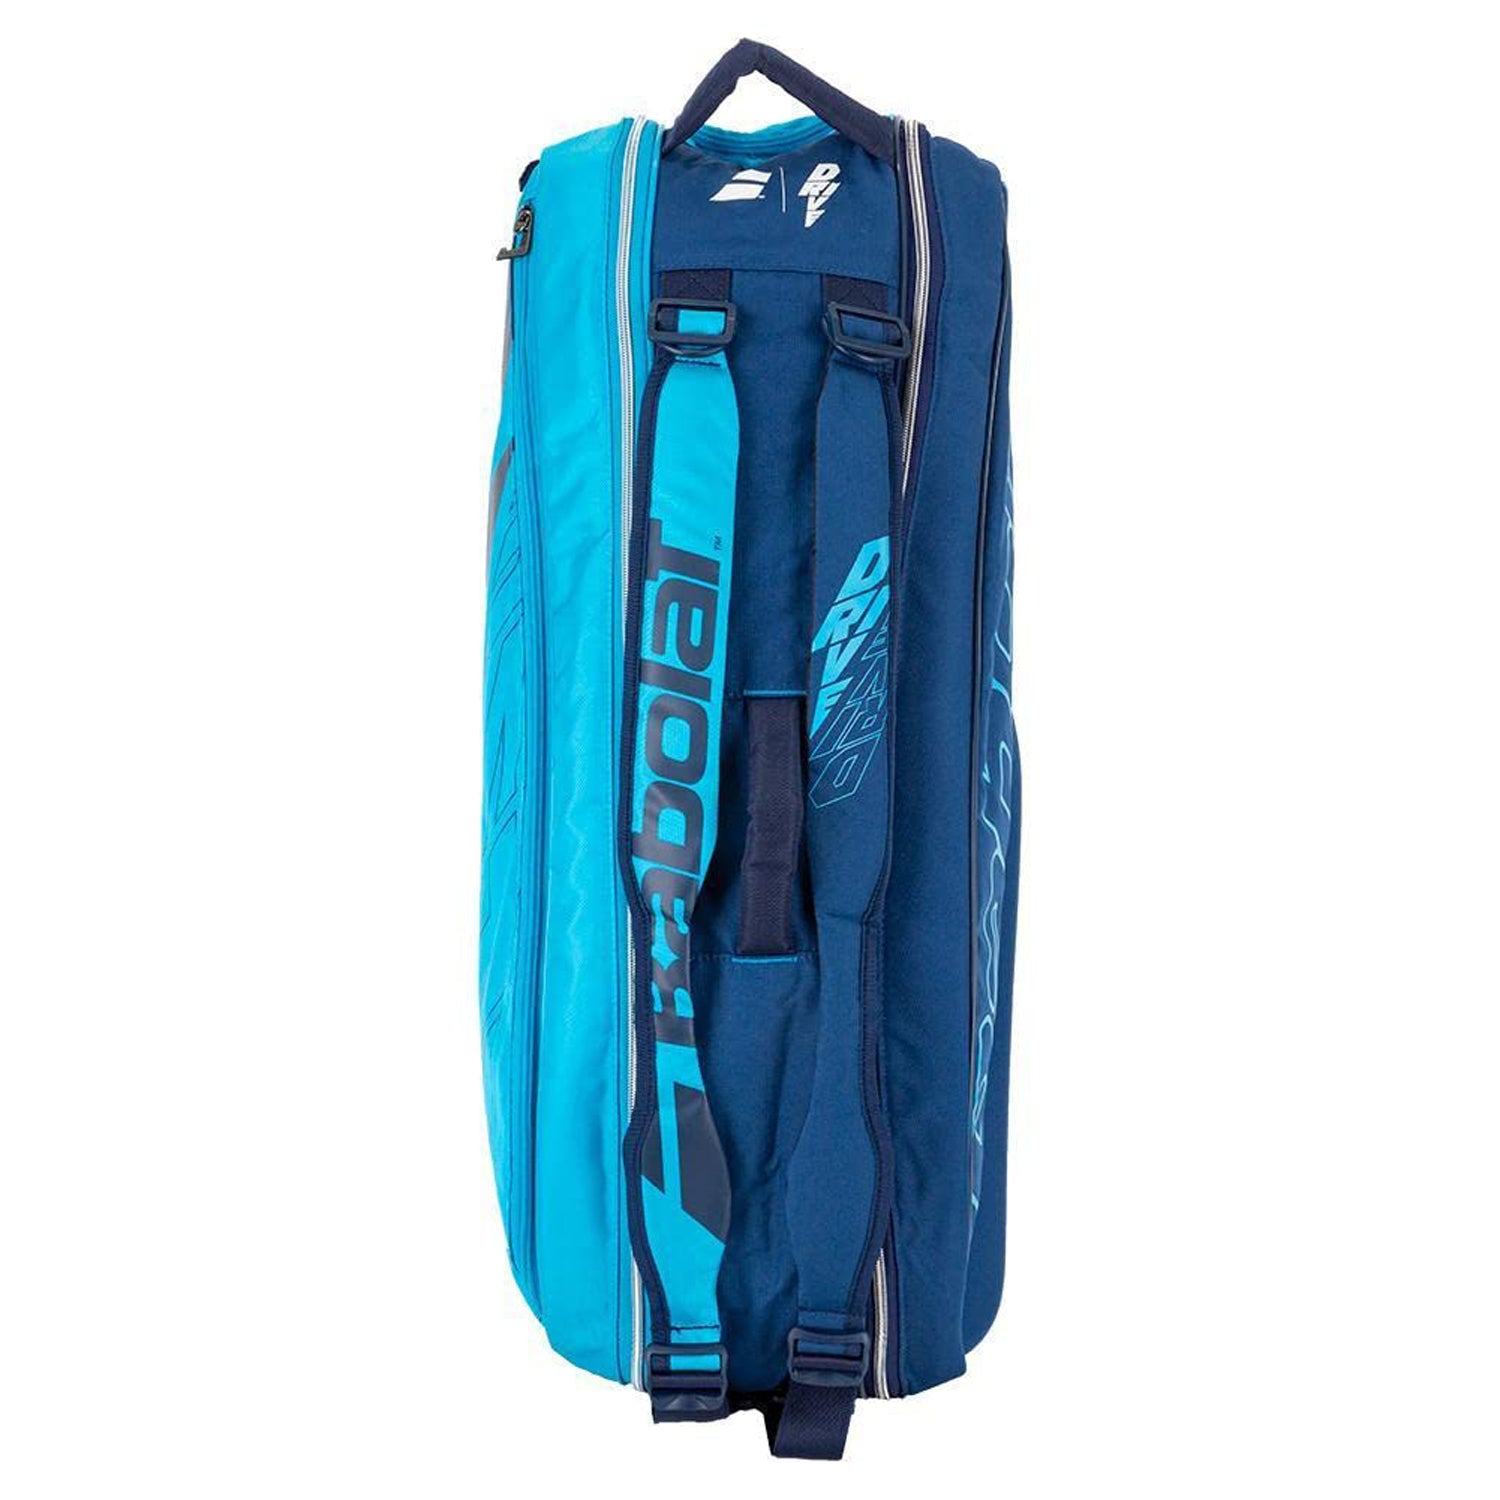 Babolat RH X 6 Pure Drive Tennis Kitbag, Blue - Best Price online Prokicksports.com